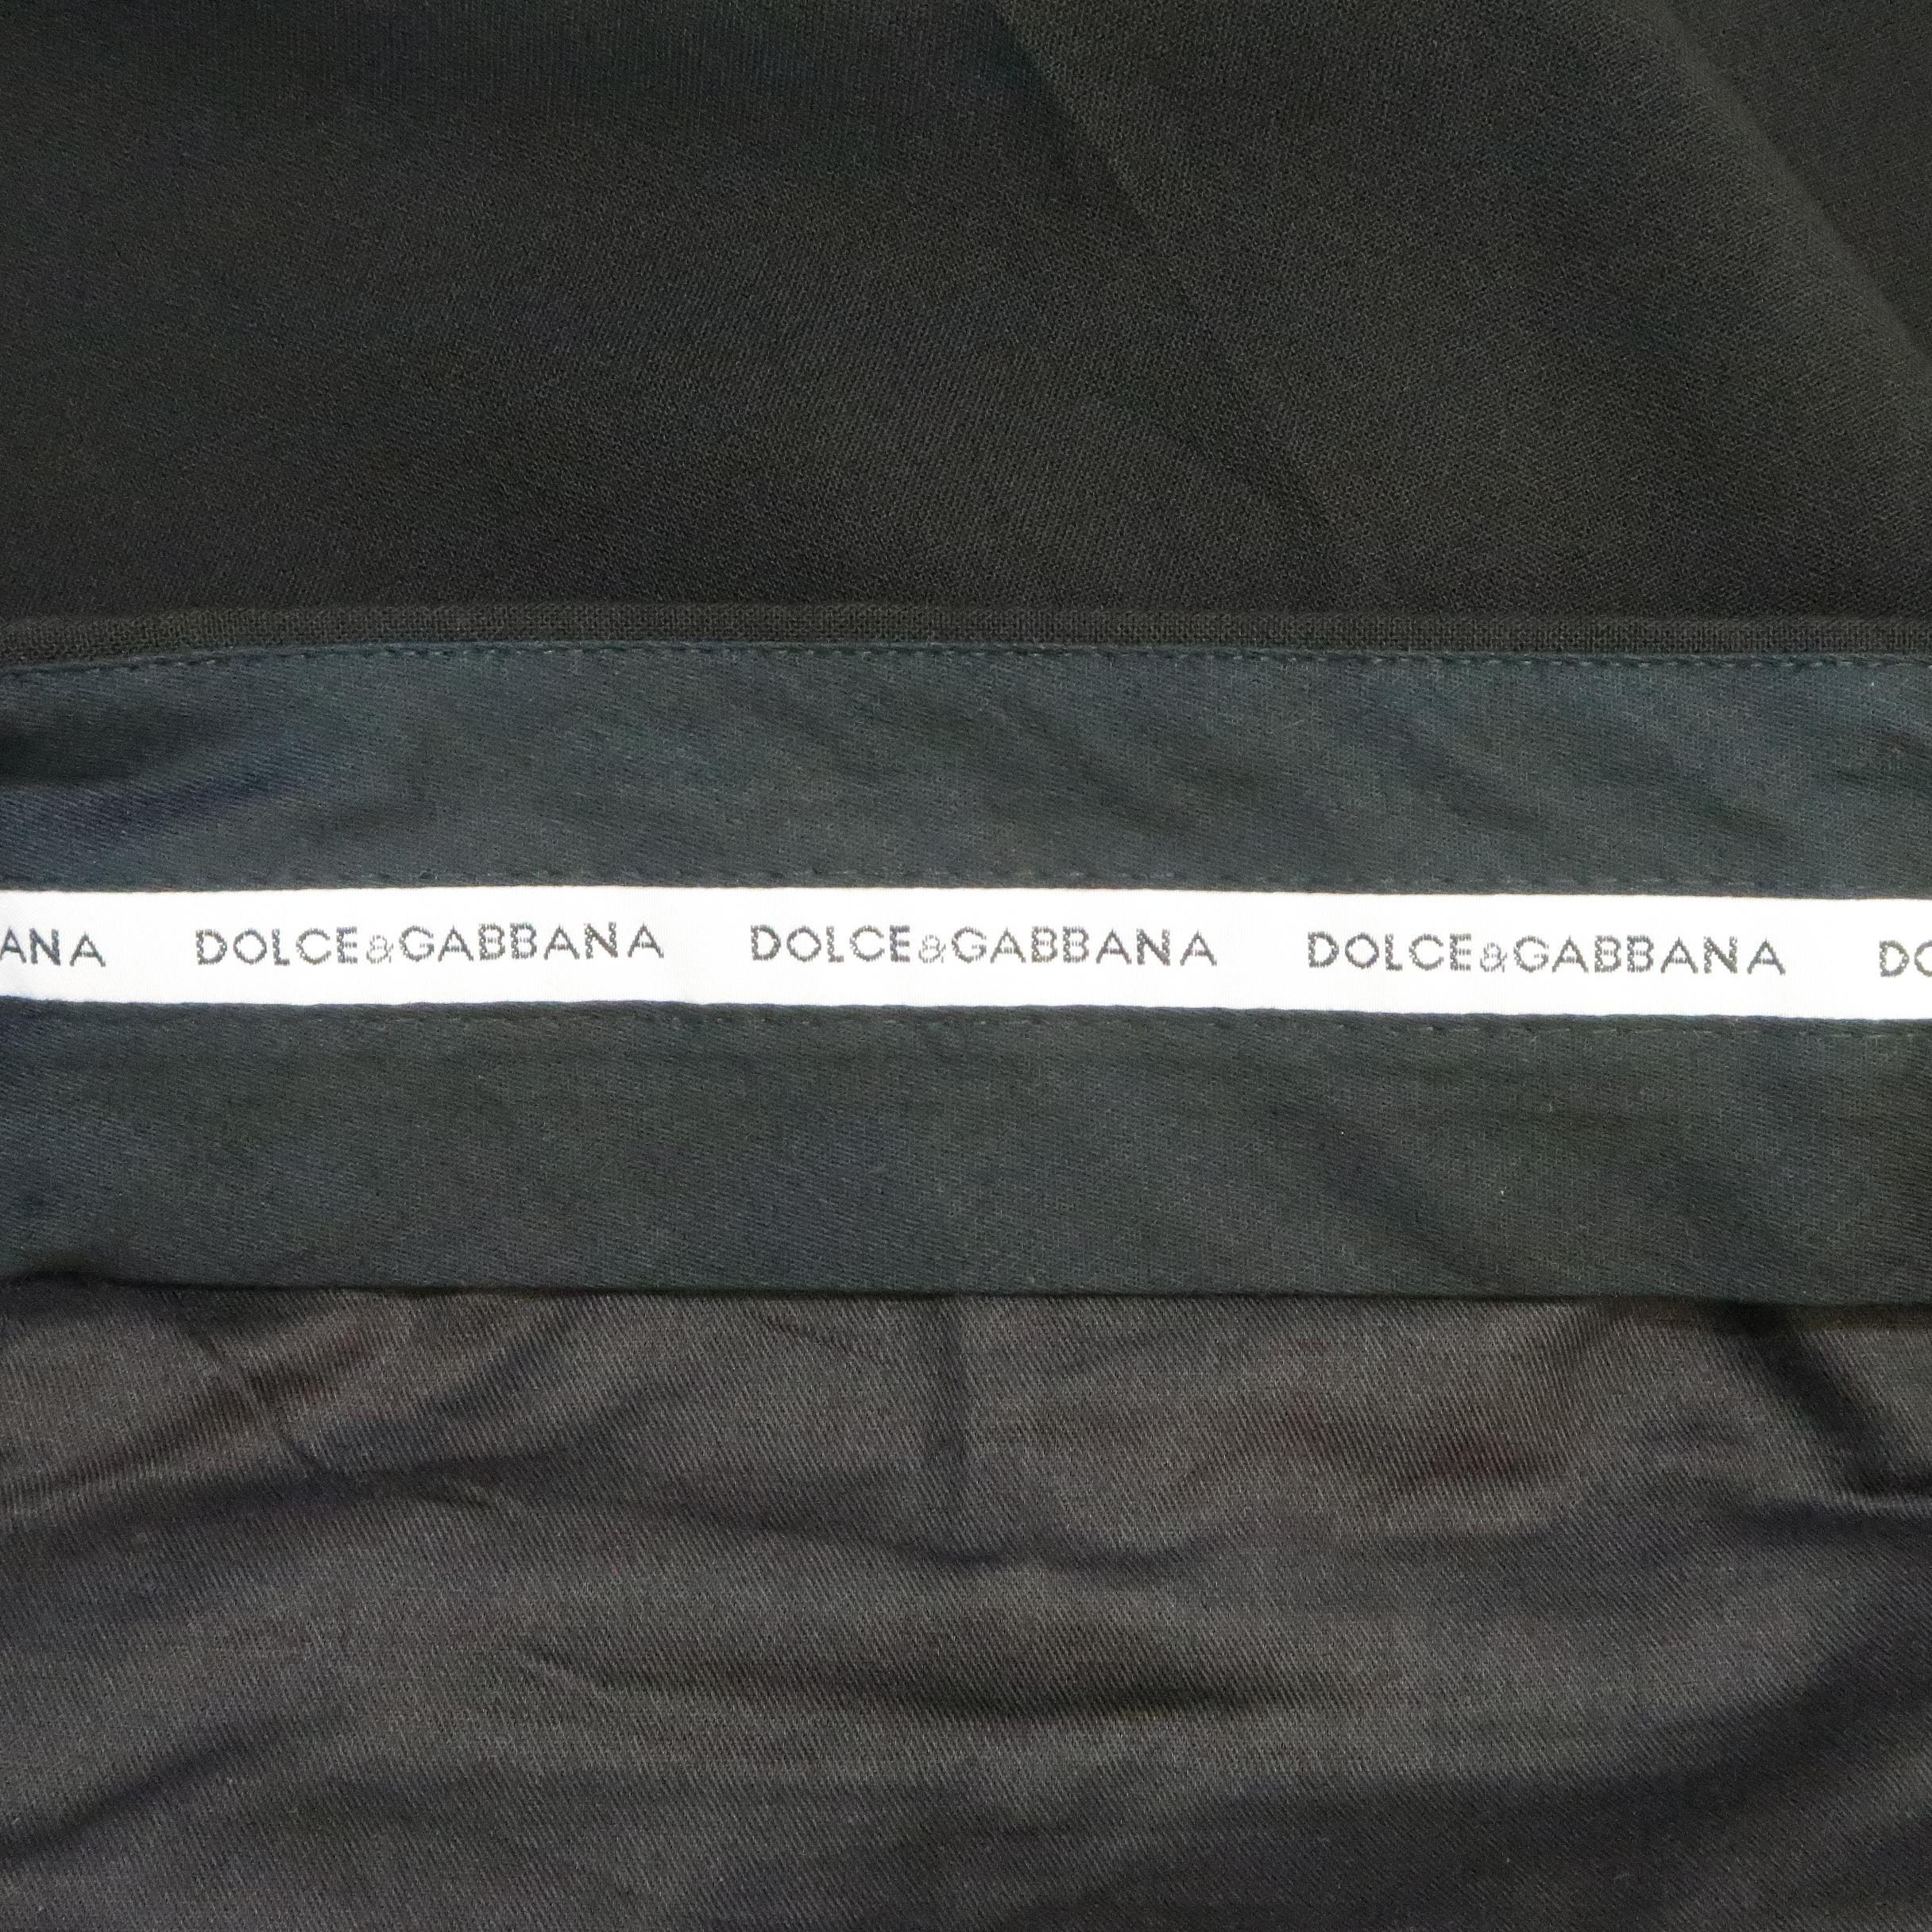 DOLCE & GABBANA Size 34 Black Solid Wool Blend Dress Pants 3